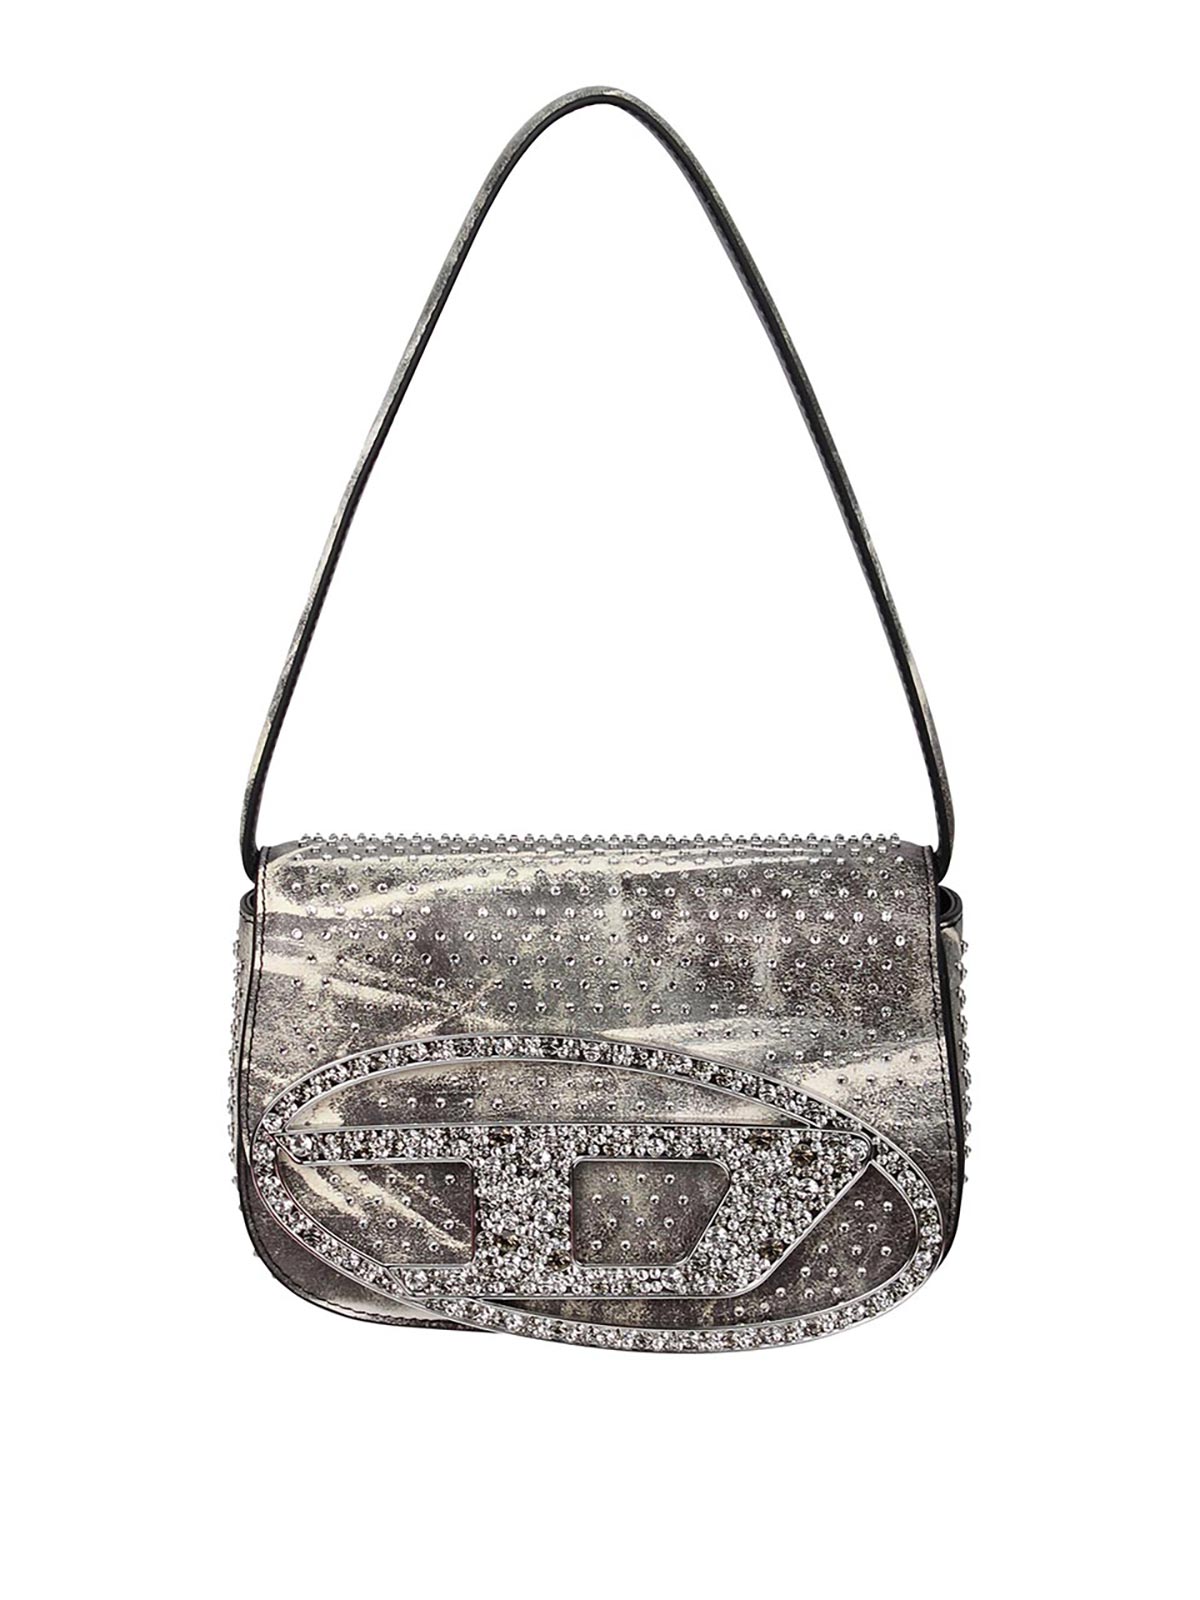 Diesel Shoulder Bag With Crystal Decoration In Silver